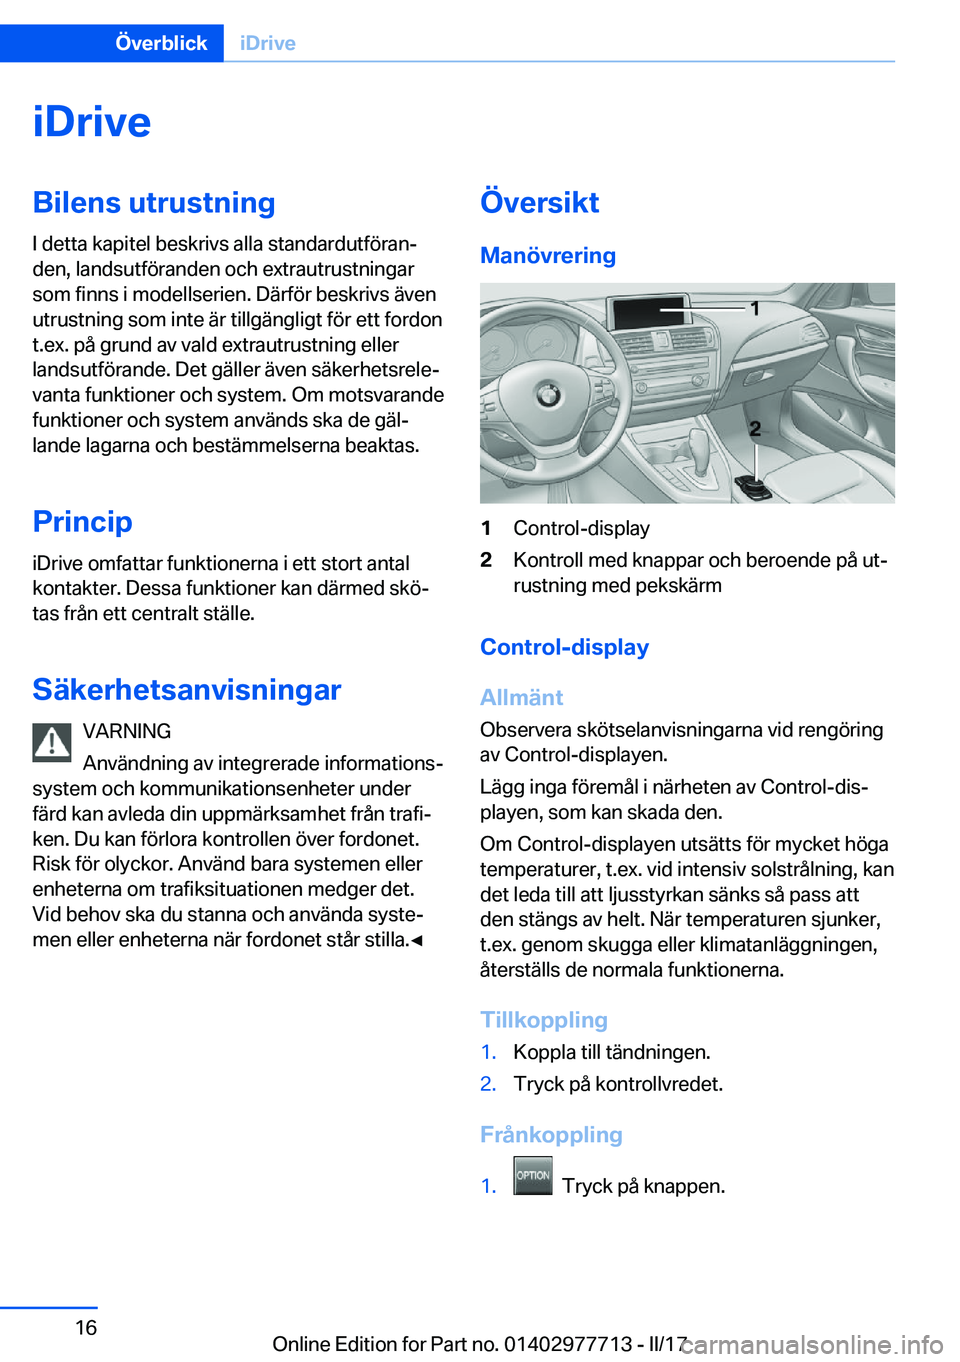 BMW 2 SERIES COUPE 2017  InstruktionsbÖcker (in Swedish) �i�D�r�i�v�e�B�i�l�e�n�s��u�t�r�u�s�t�n�i�n�g
�I� �d�e�t�t�a� �k�a�p�i�t�e�l� �b�e�s�k�r�i�v�s� �a�l�l�a� �s�t�a�n�d�a�r�d�u�t�f�